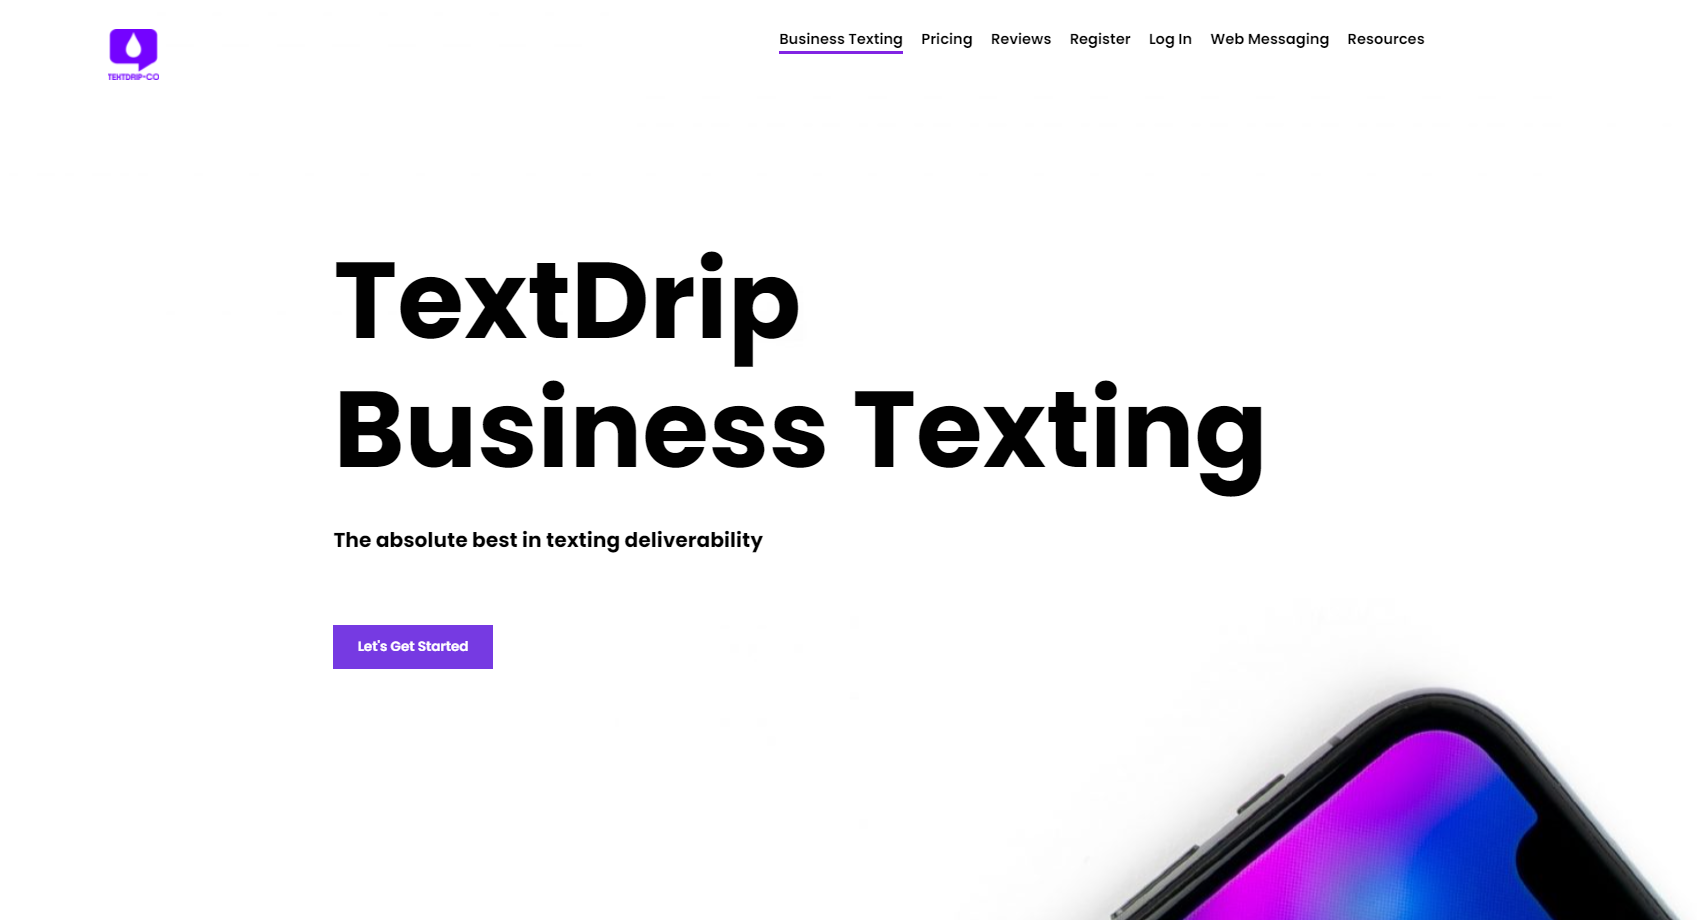 Textdrip website home page